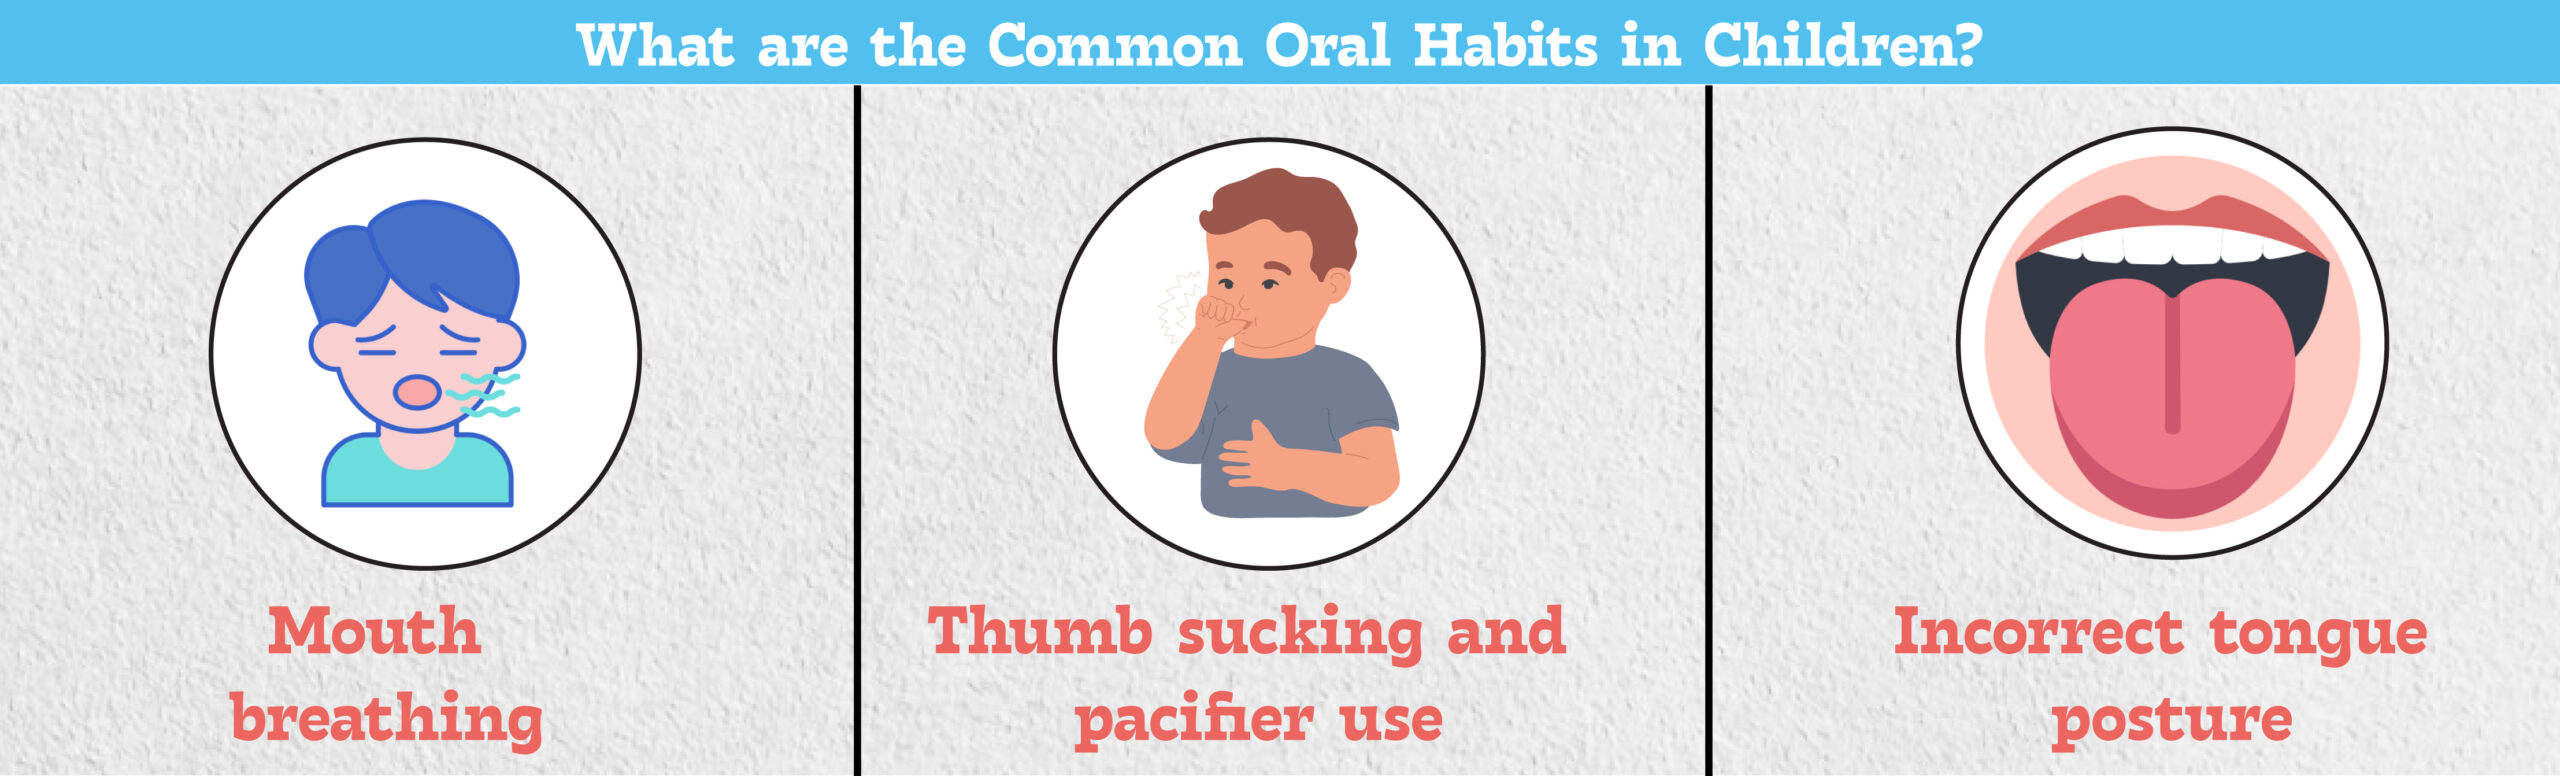 Common Oral Habits in Children